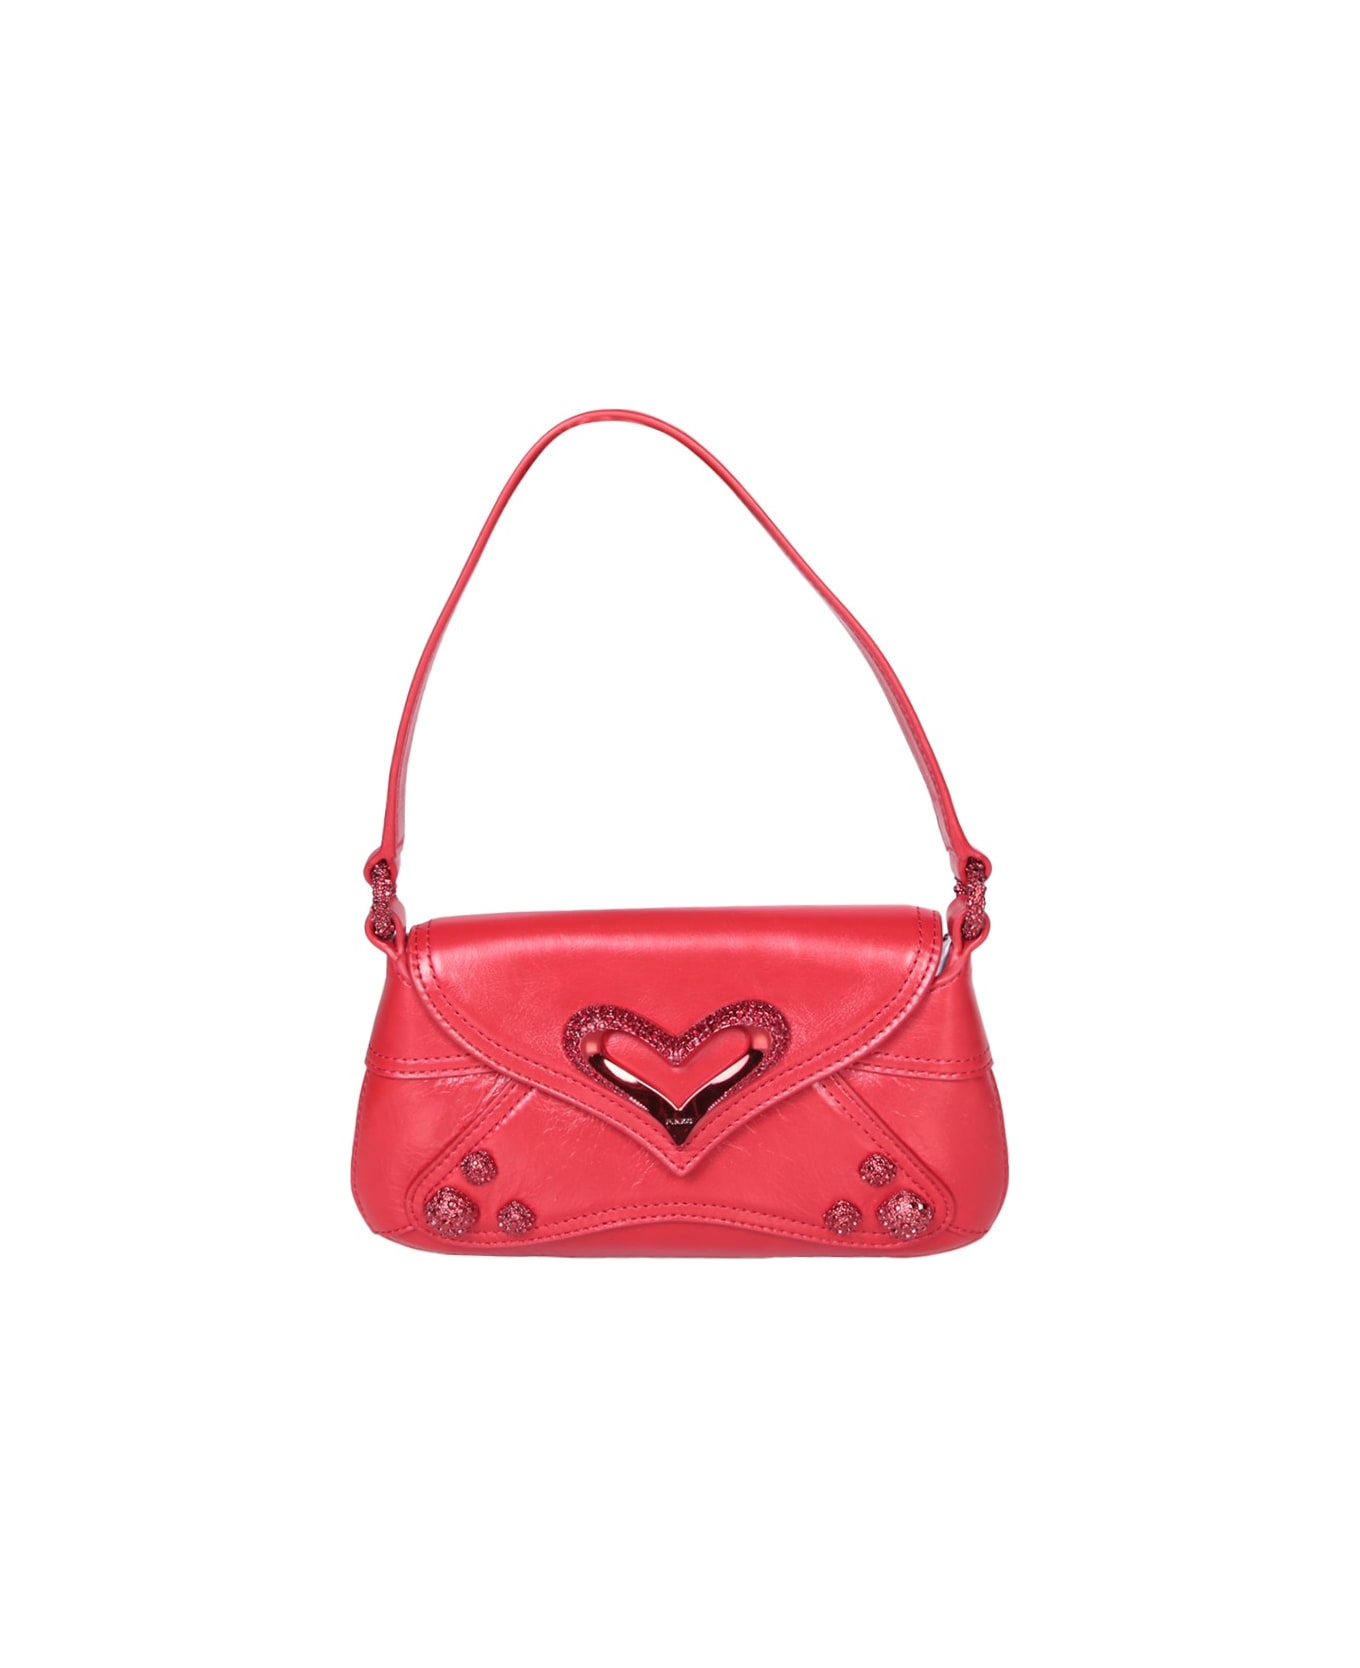 Pinko 520 Baby Shoulder Bag - Red トートバッグ